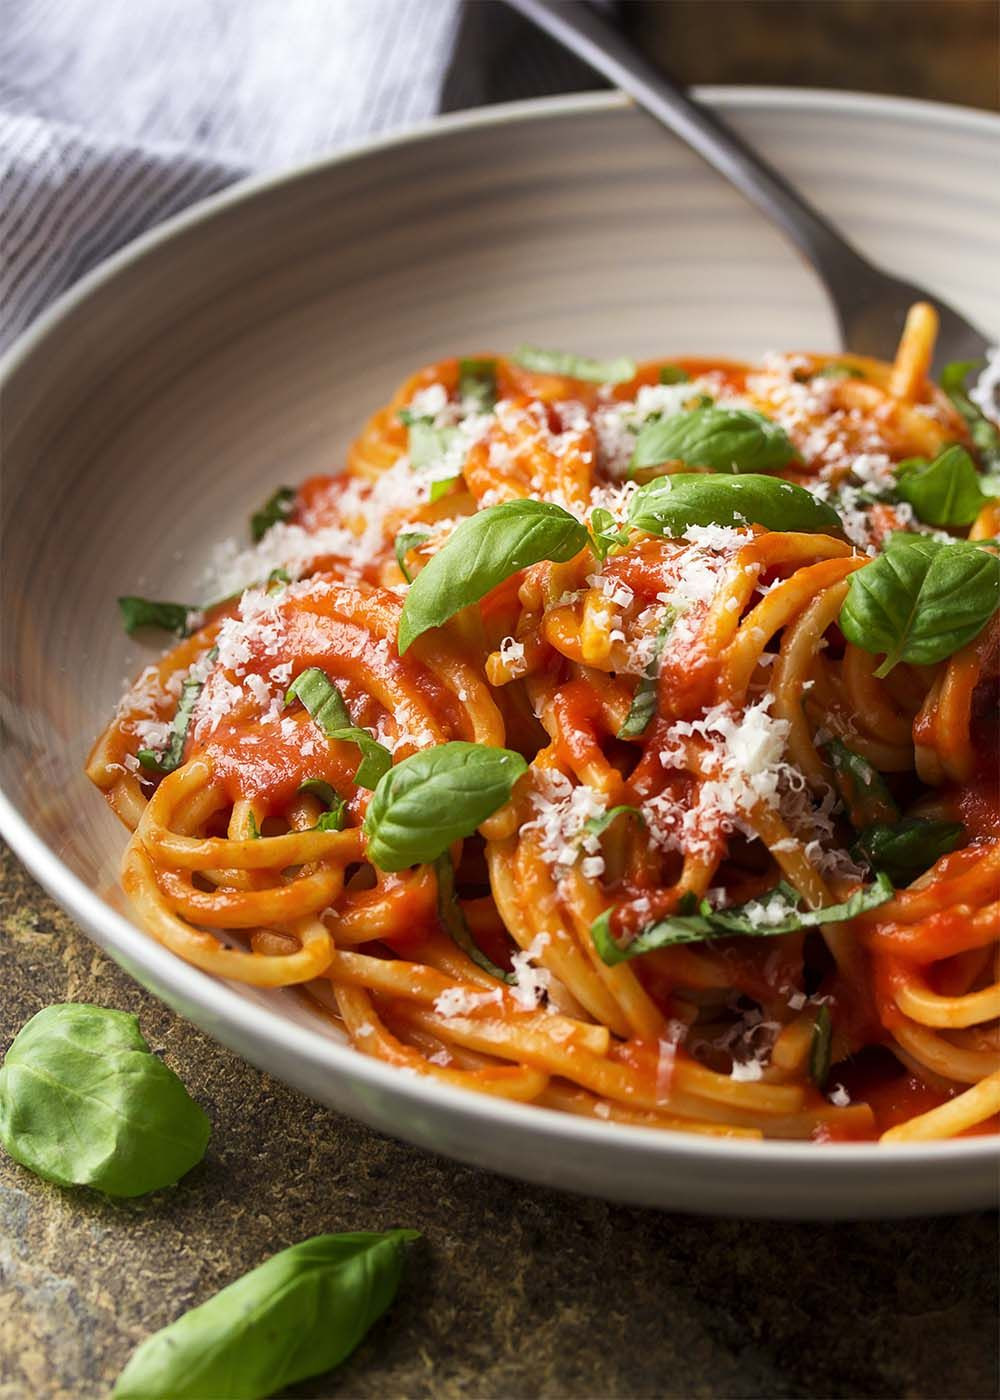 Homemade Spaghetti Sauce From Fresh Tomatoes Real Italian
 How to Make Italian Pomodoro Sauce